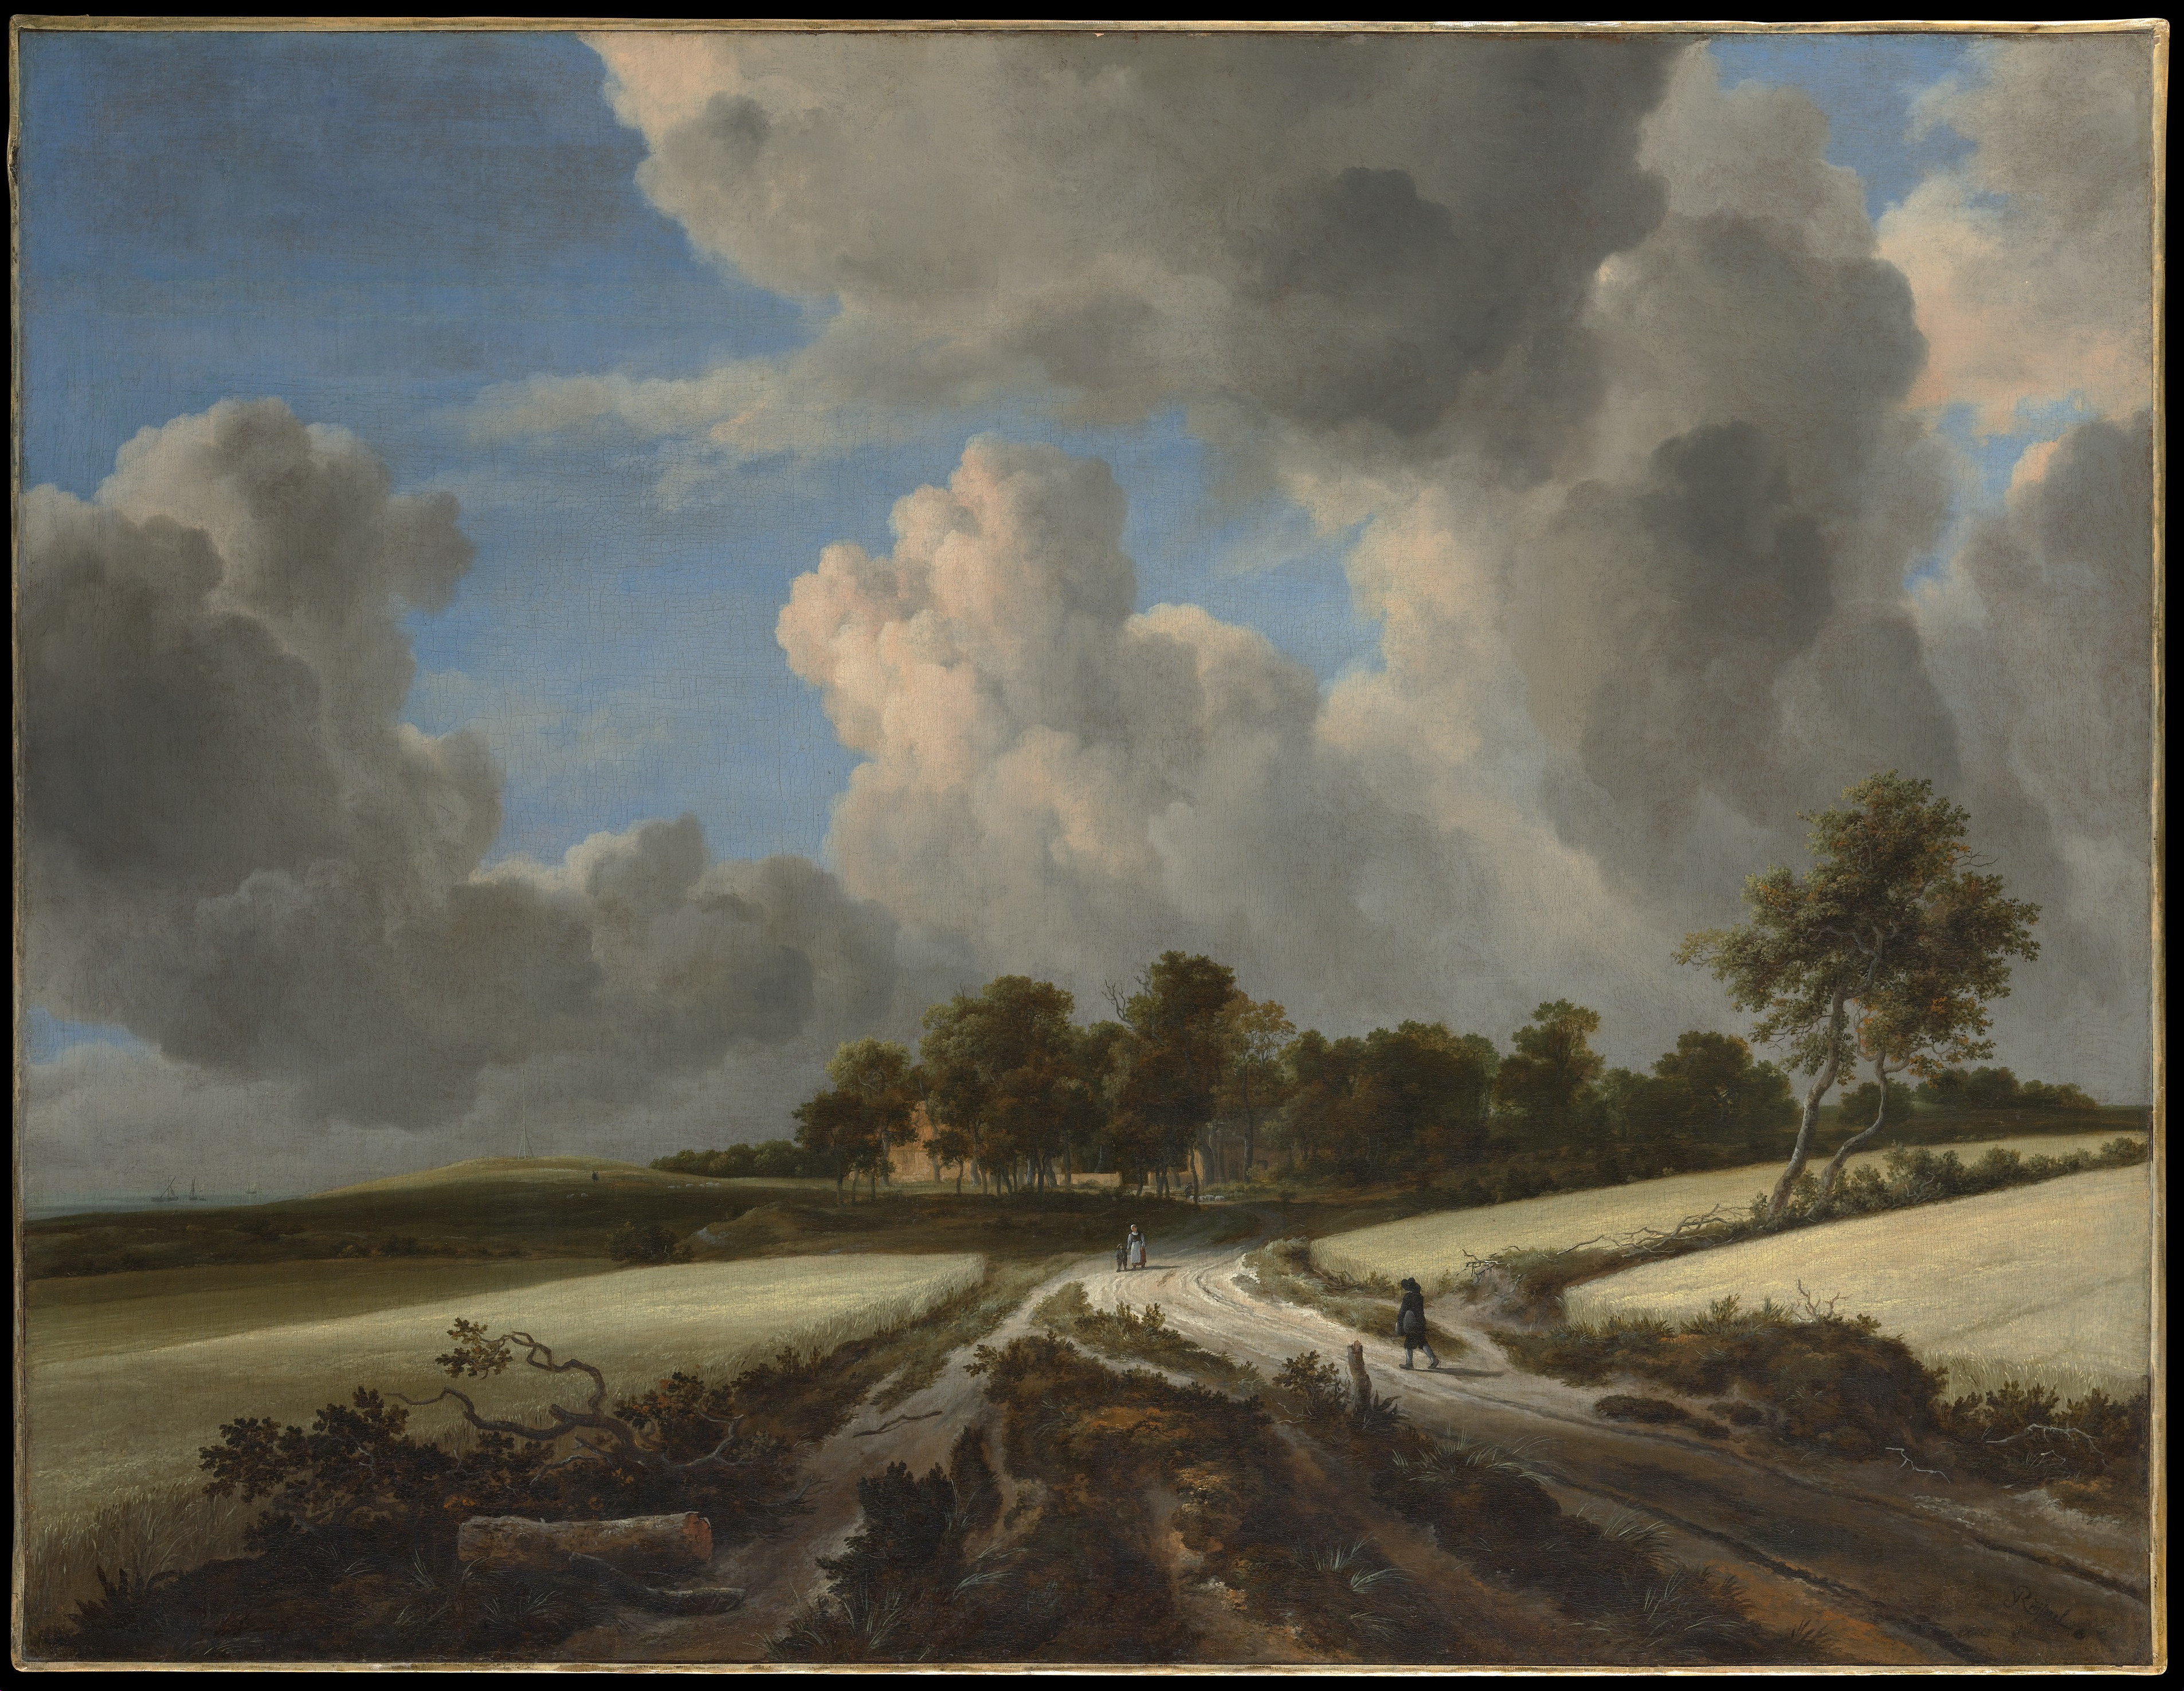 Wheat Fields by Jacob van Ruisdael - ca. 1670 - 100 x 130.2 cm Metropolitan Museum of Art